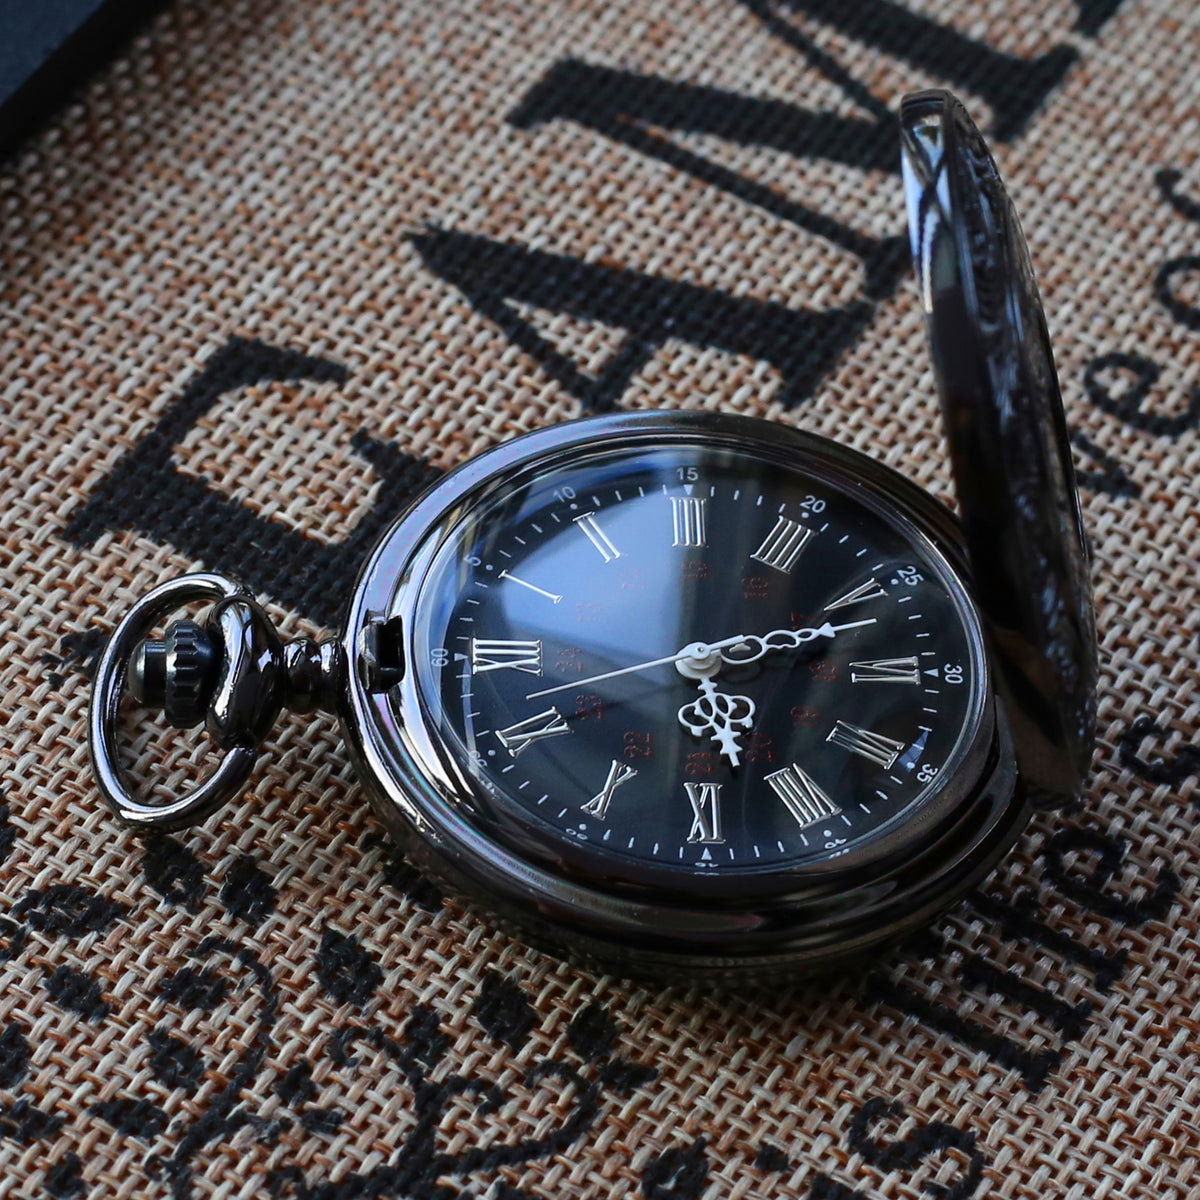 Groomsmen Gift Black Pocket Watch with Roman numerals Groomsmen gifts Wedding pocket watch VQ005